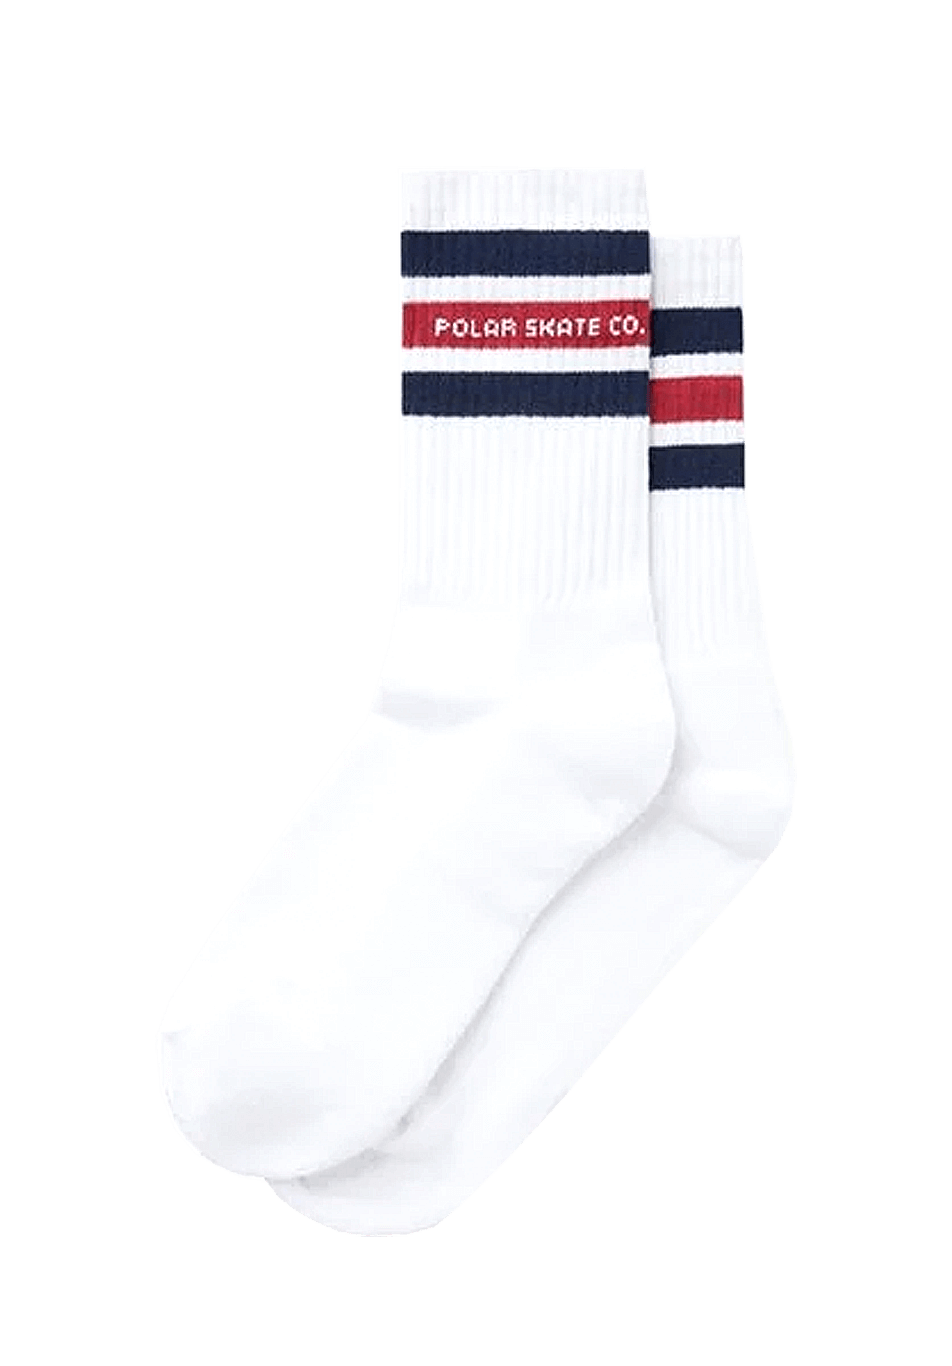 Polar Skate Co. Fat Stripe Socken Weiß Marine Rot